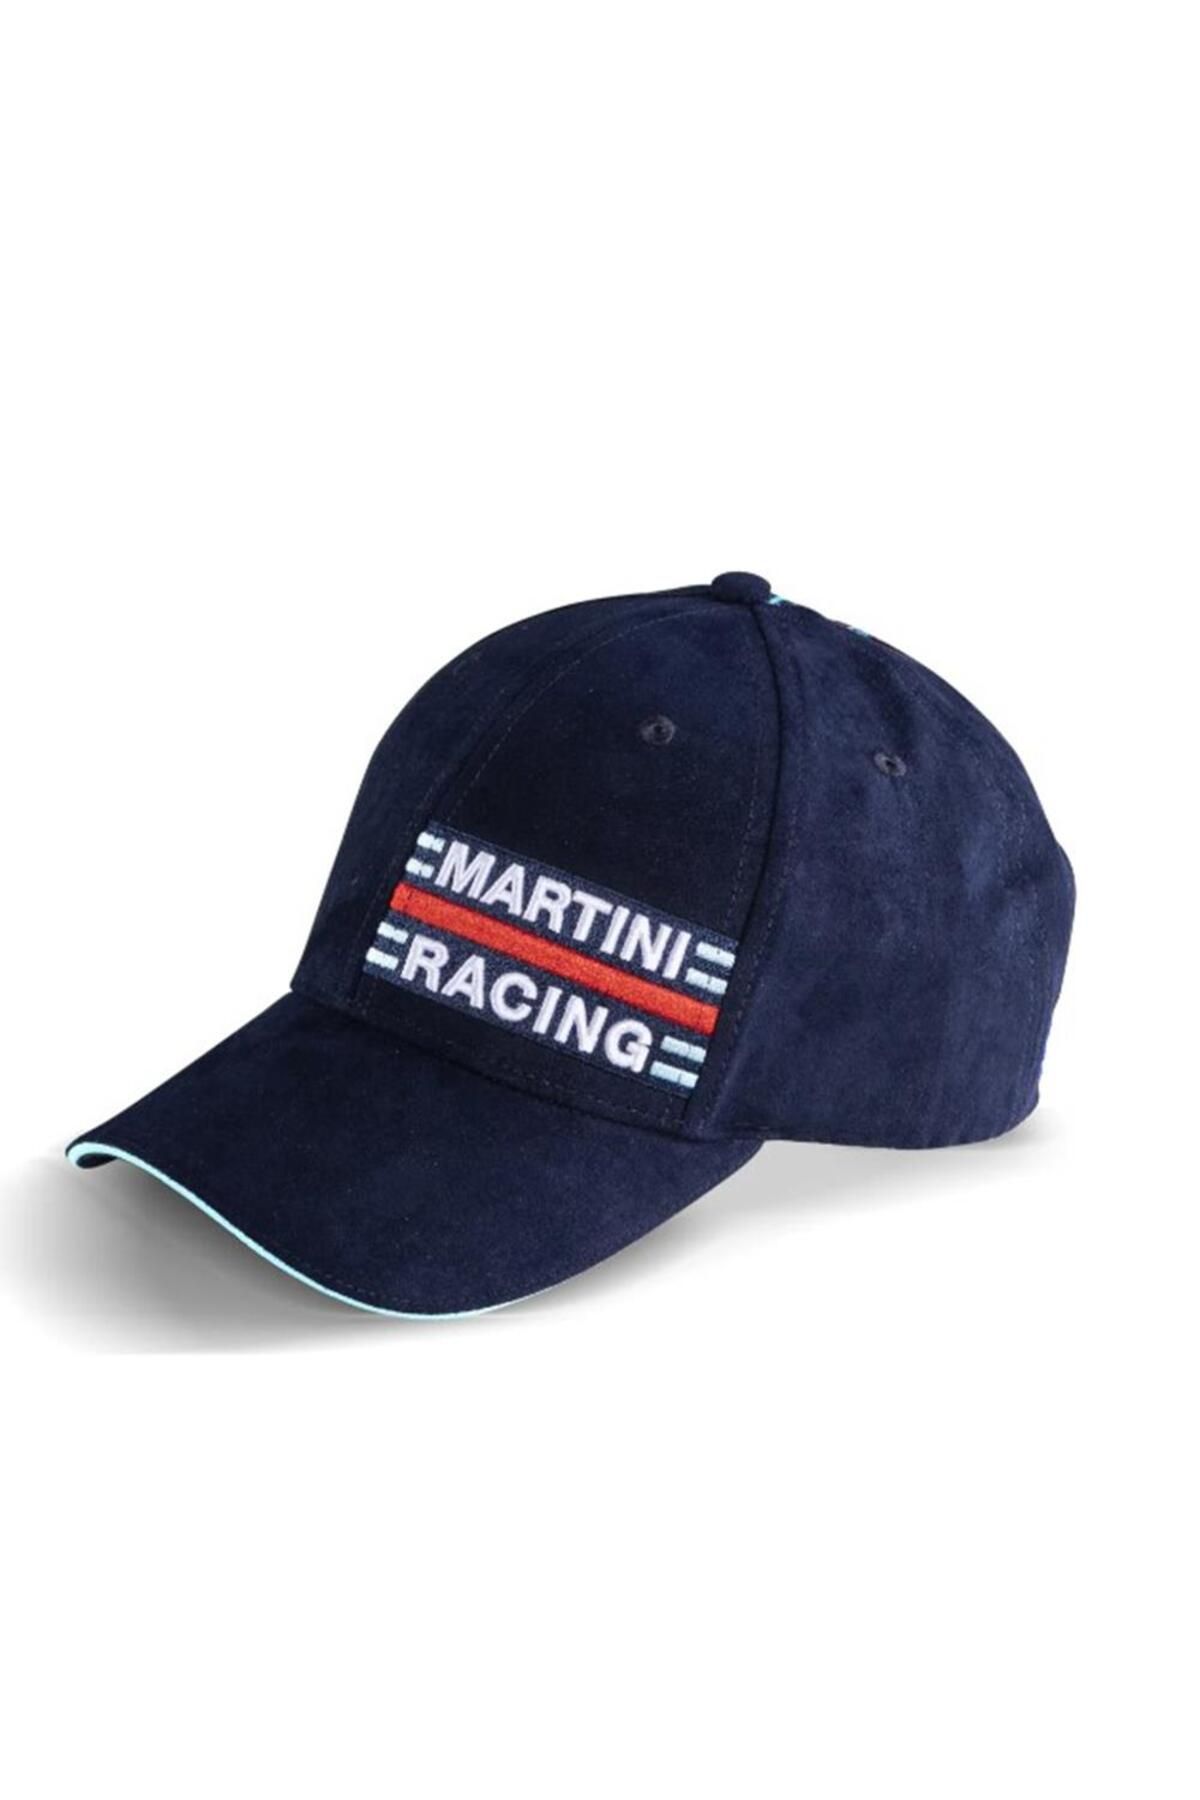 Sparco Martini Racing Şapka Lacivert